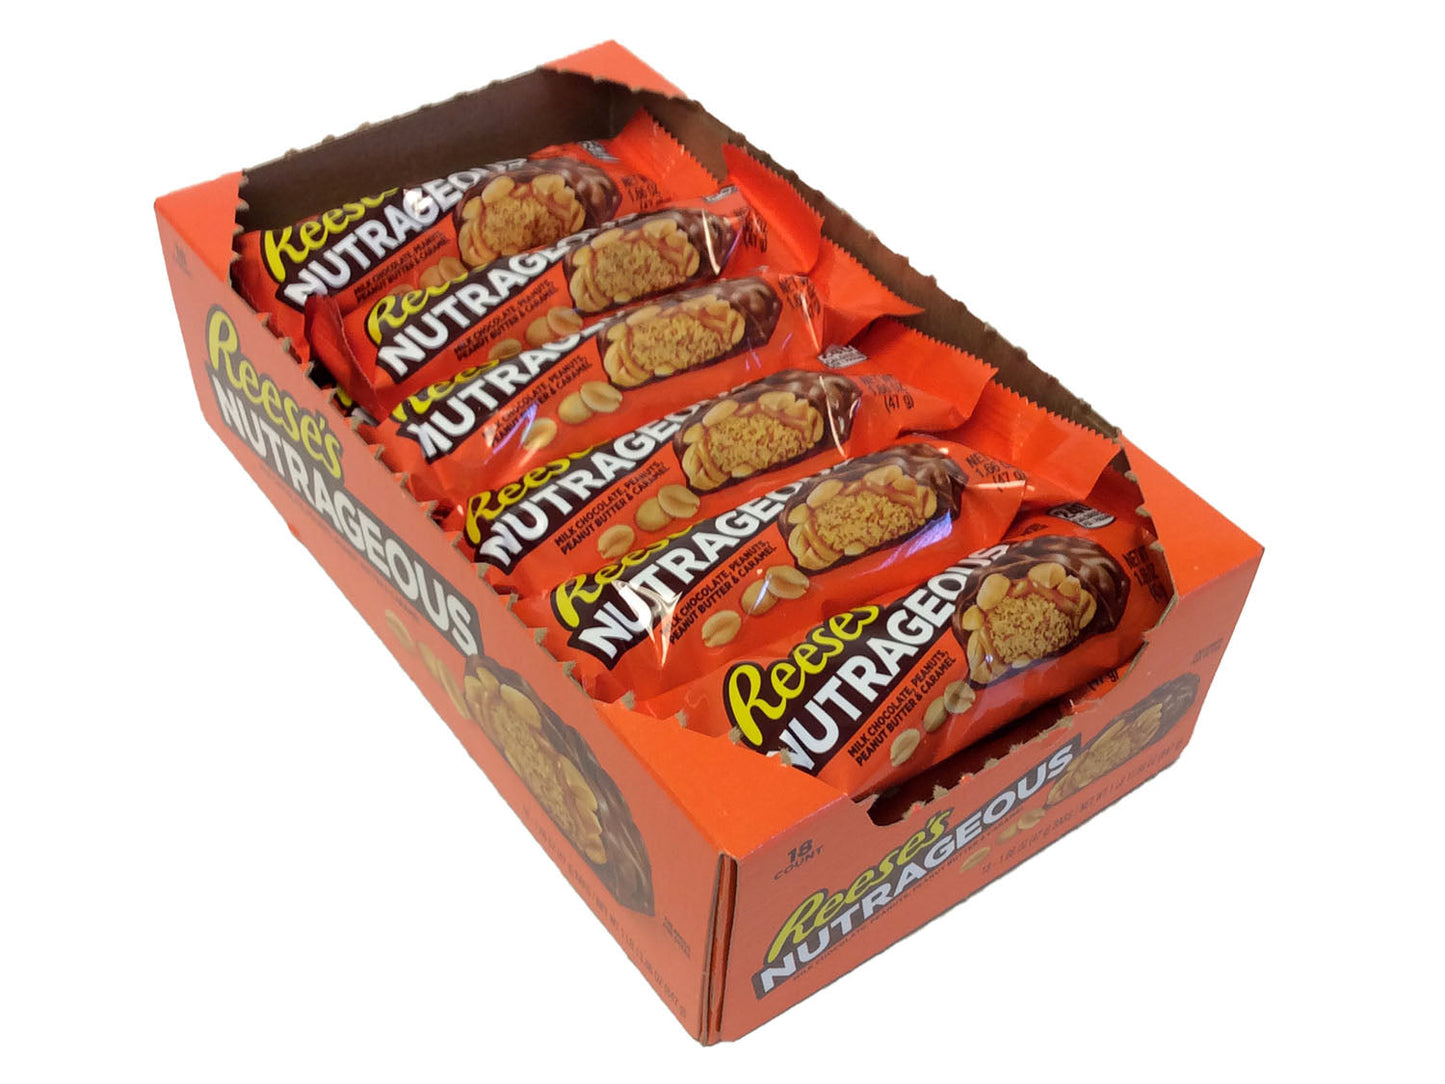 Reese's NutRageous - 1.66 oz bar - box of 18 open